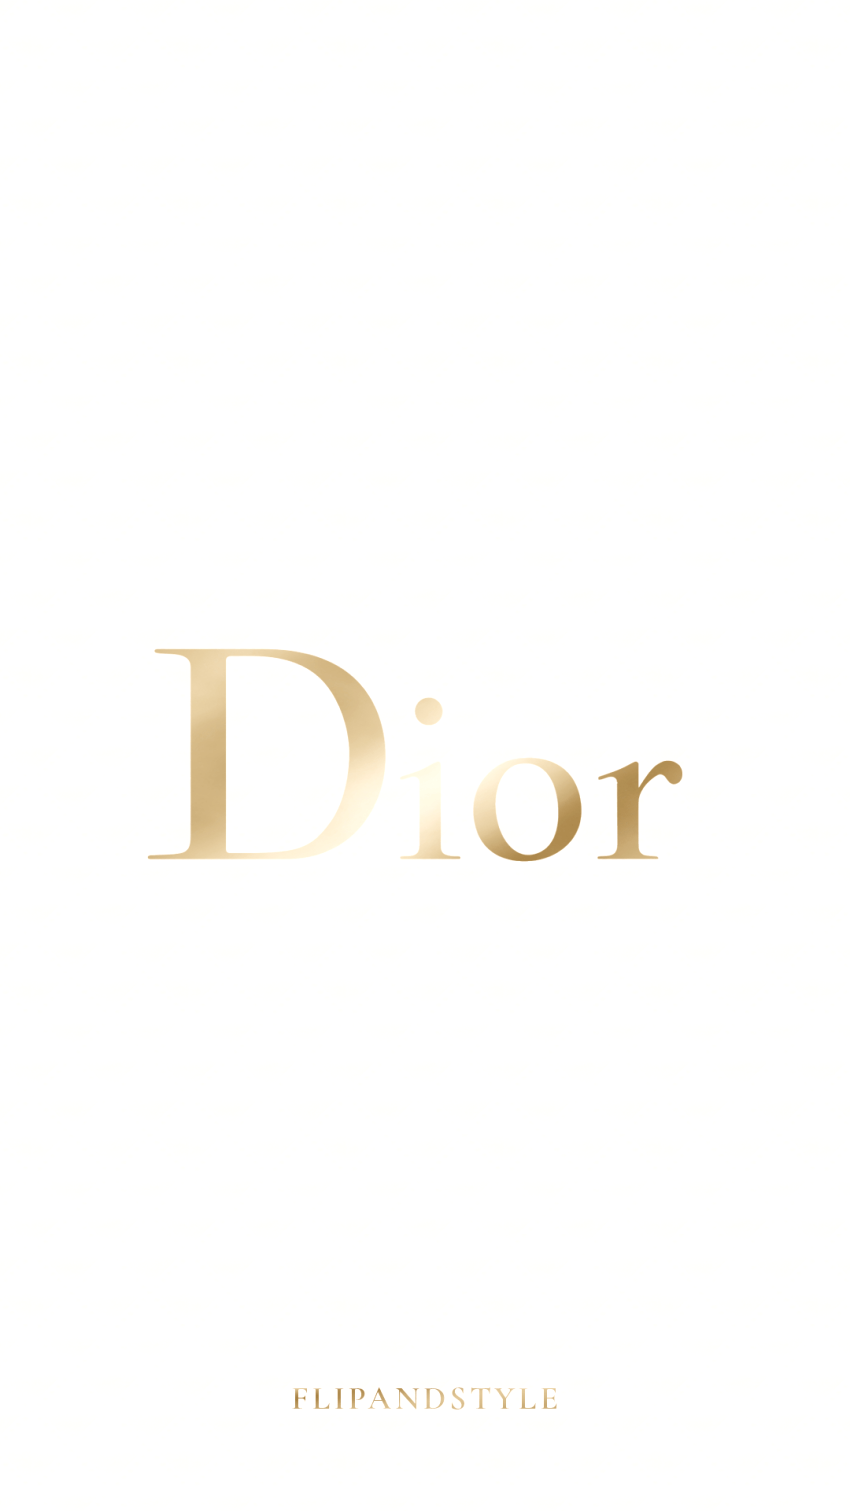 Dior Logo Wallpapers - Top Free Dior Logo Backgrounds - WallpaperAccess